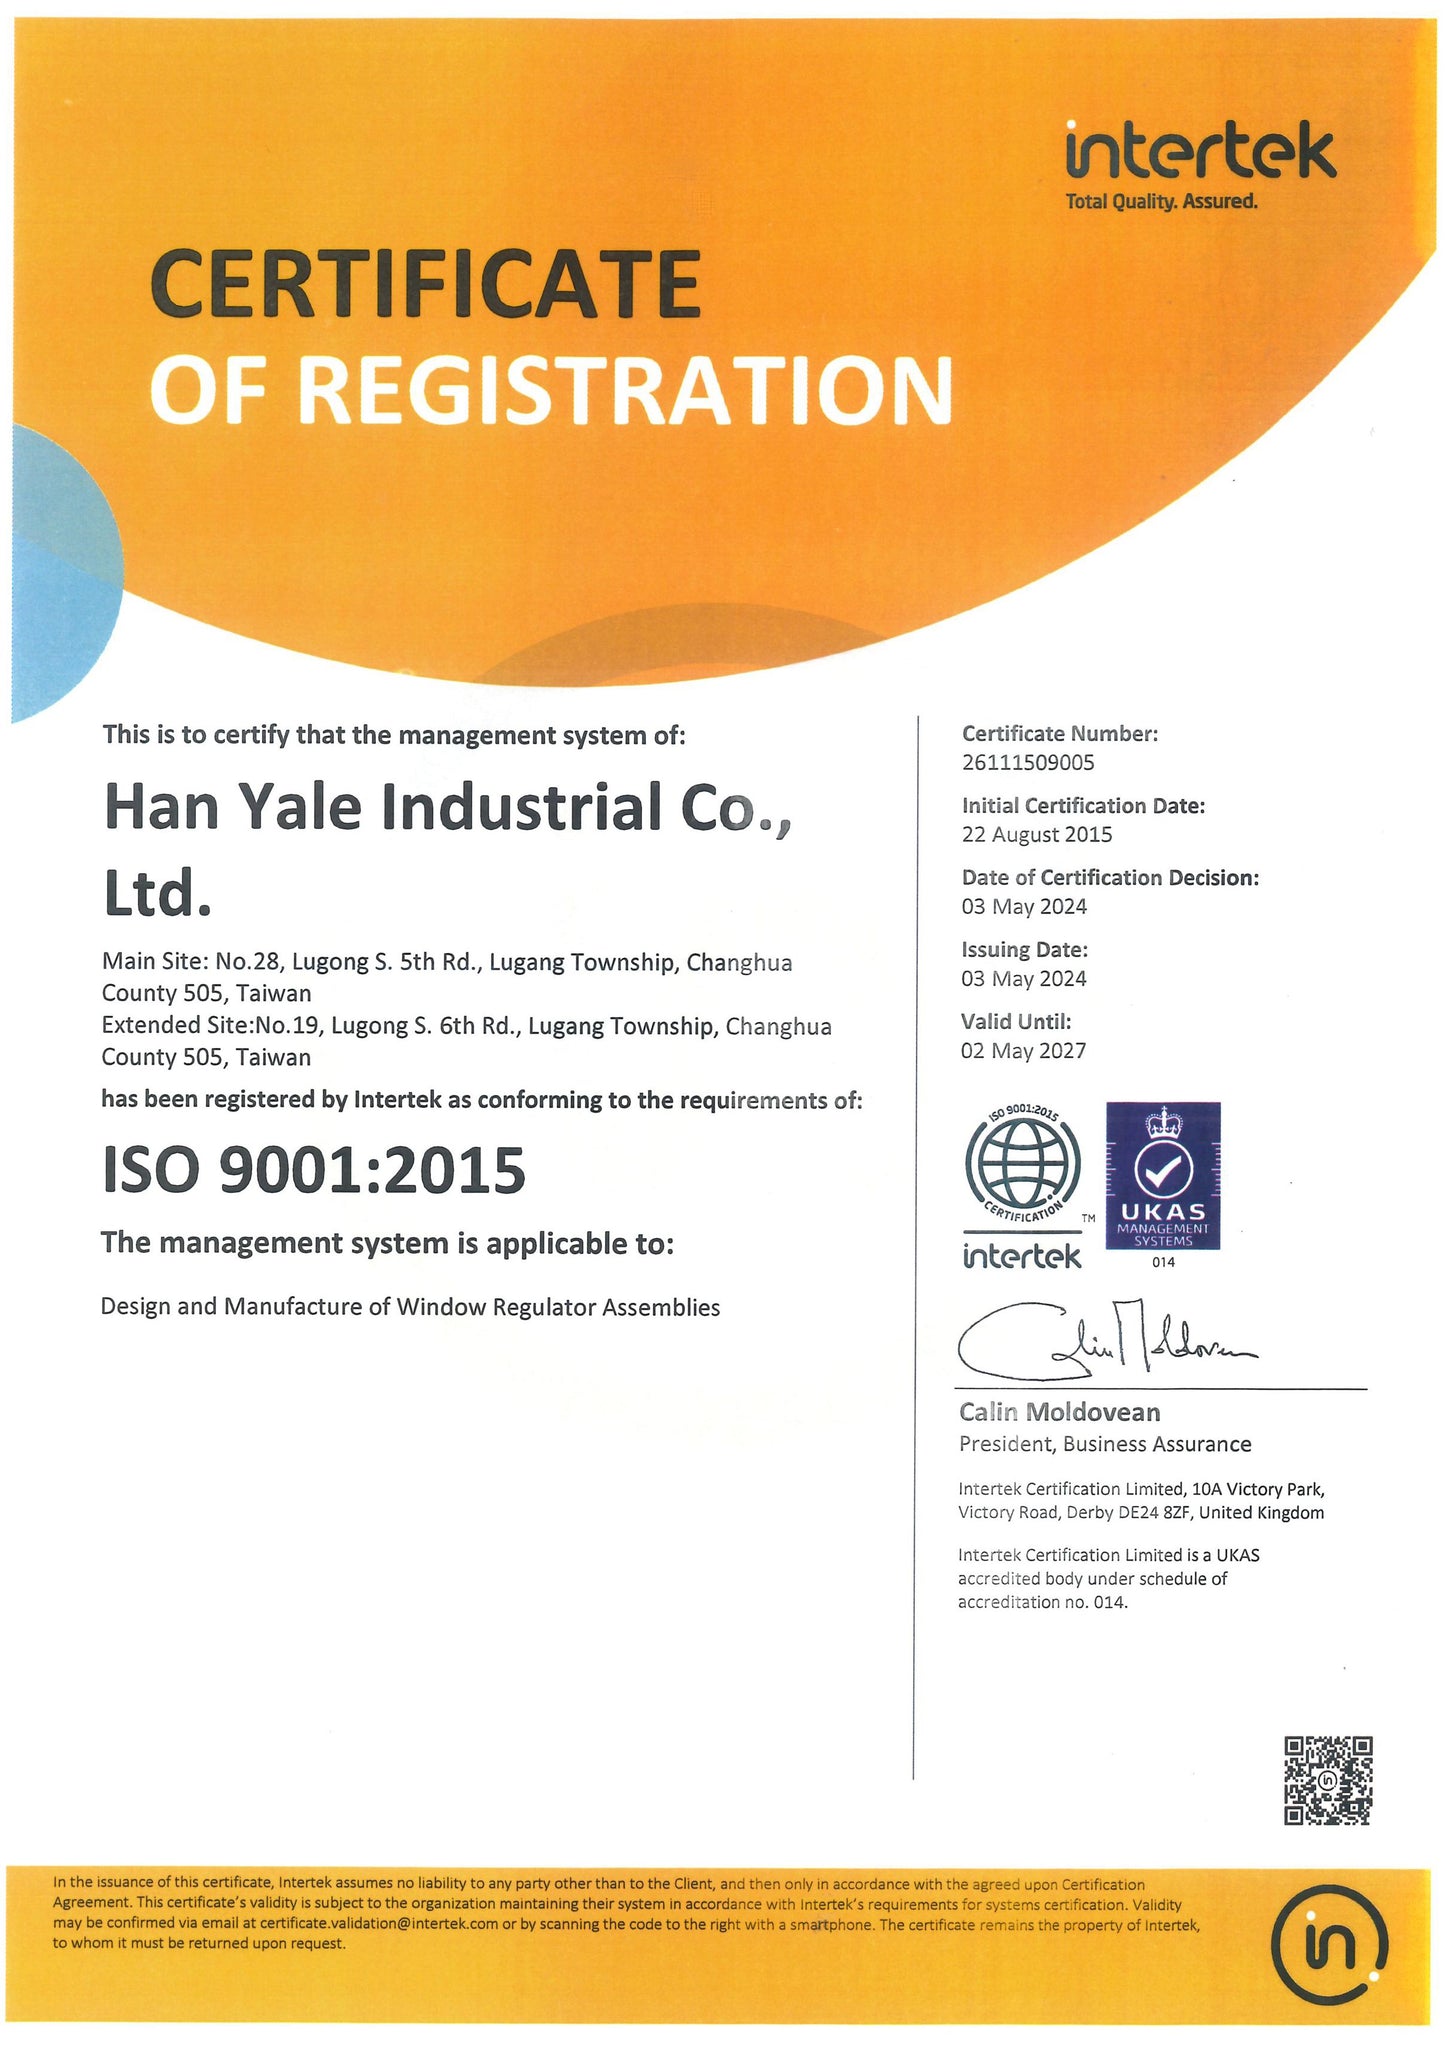 Han Yale Ind. Co., Ltd.